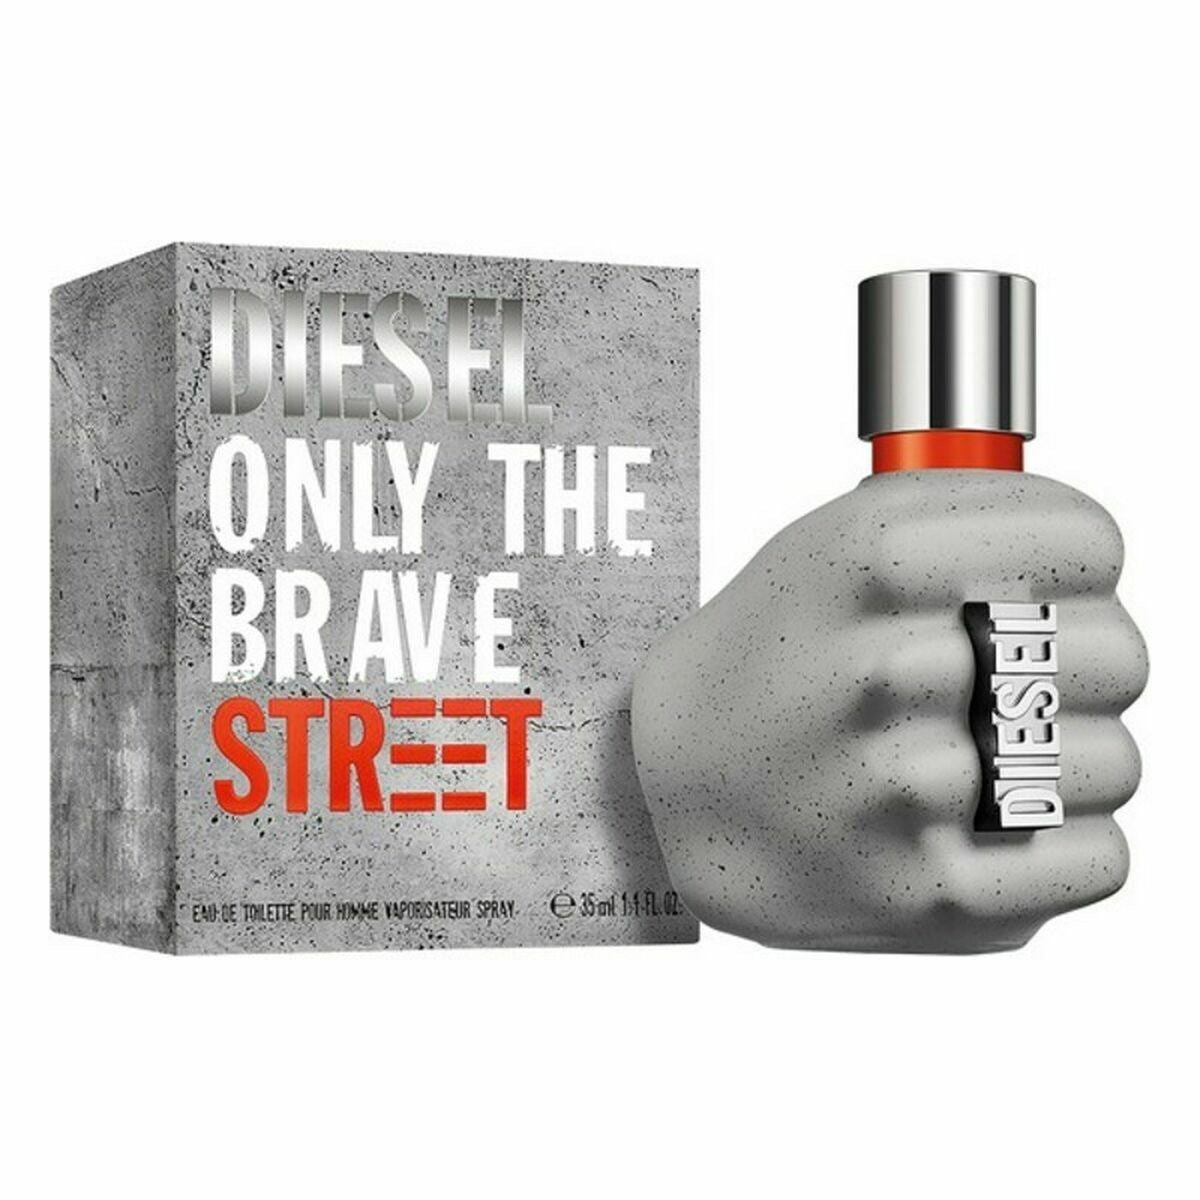 Parfumuri pentru bărbați Diesel Edt Only the Brave Street (35 ml)